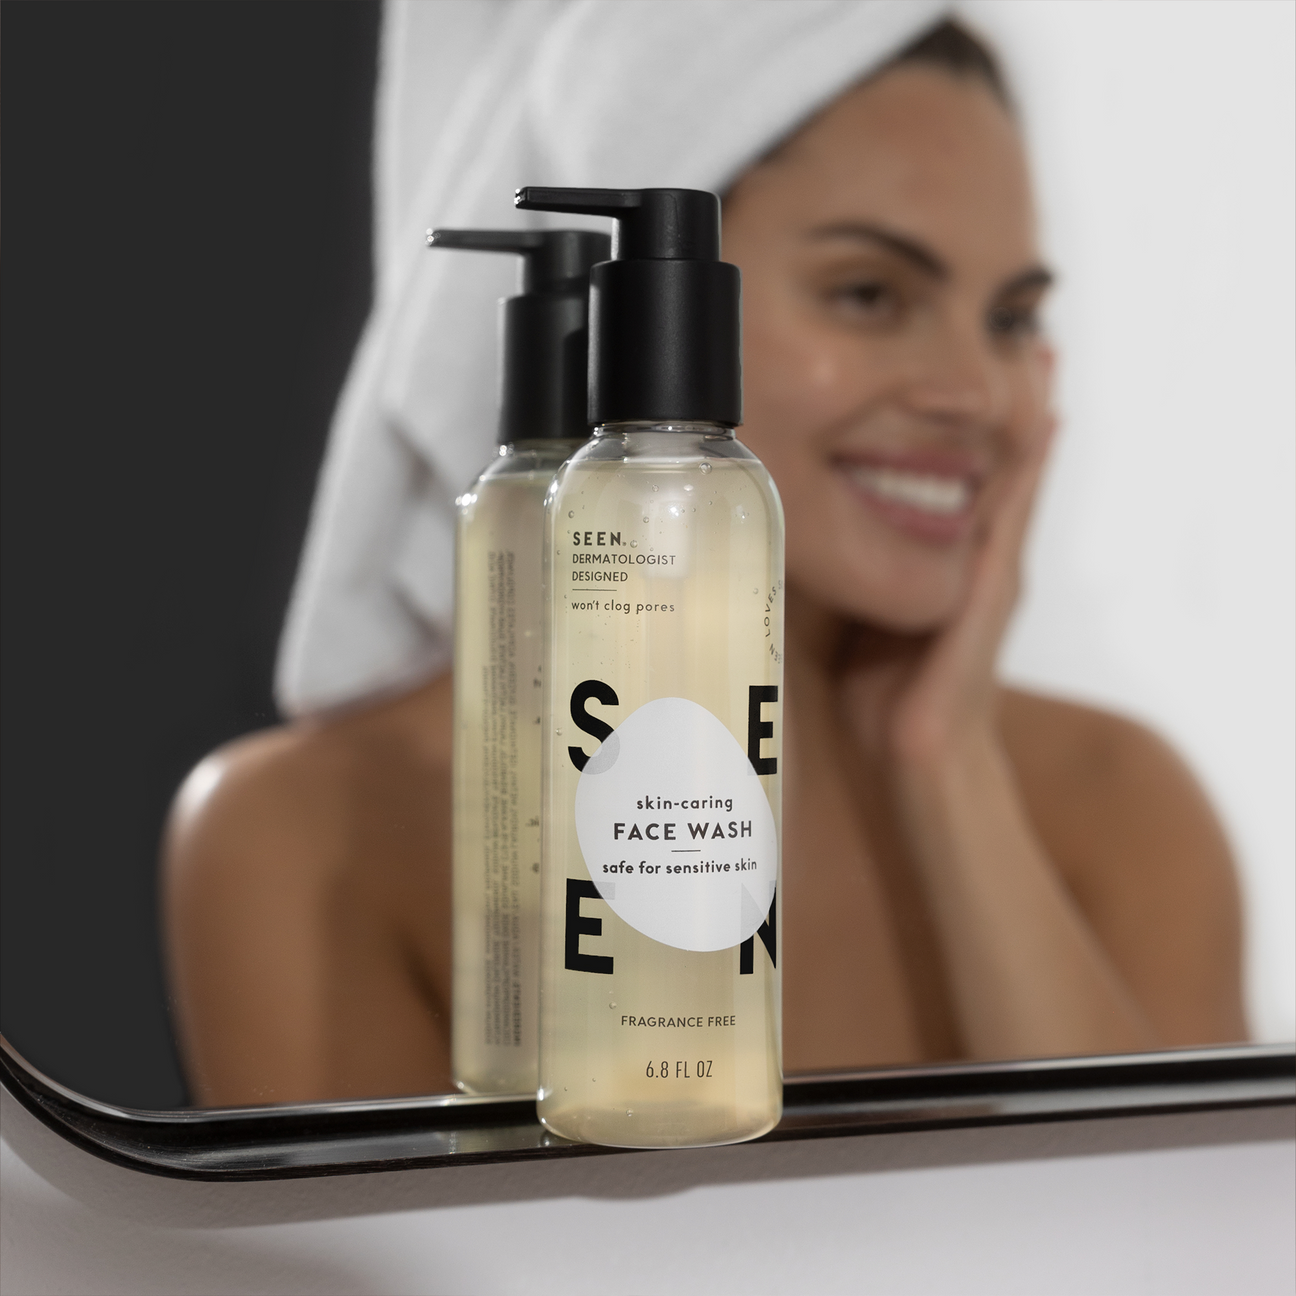 Skin-Caring Face Wash, Fragrance Free